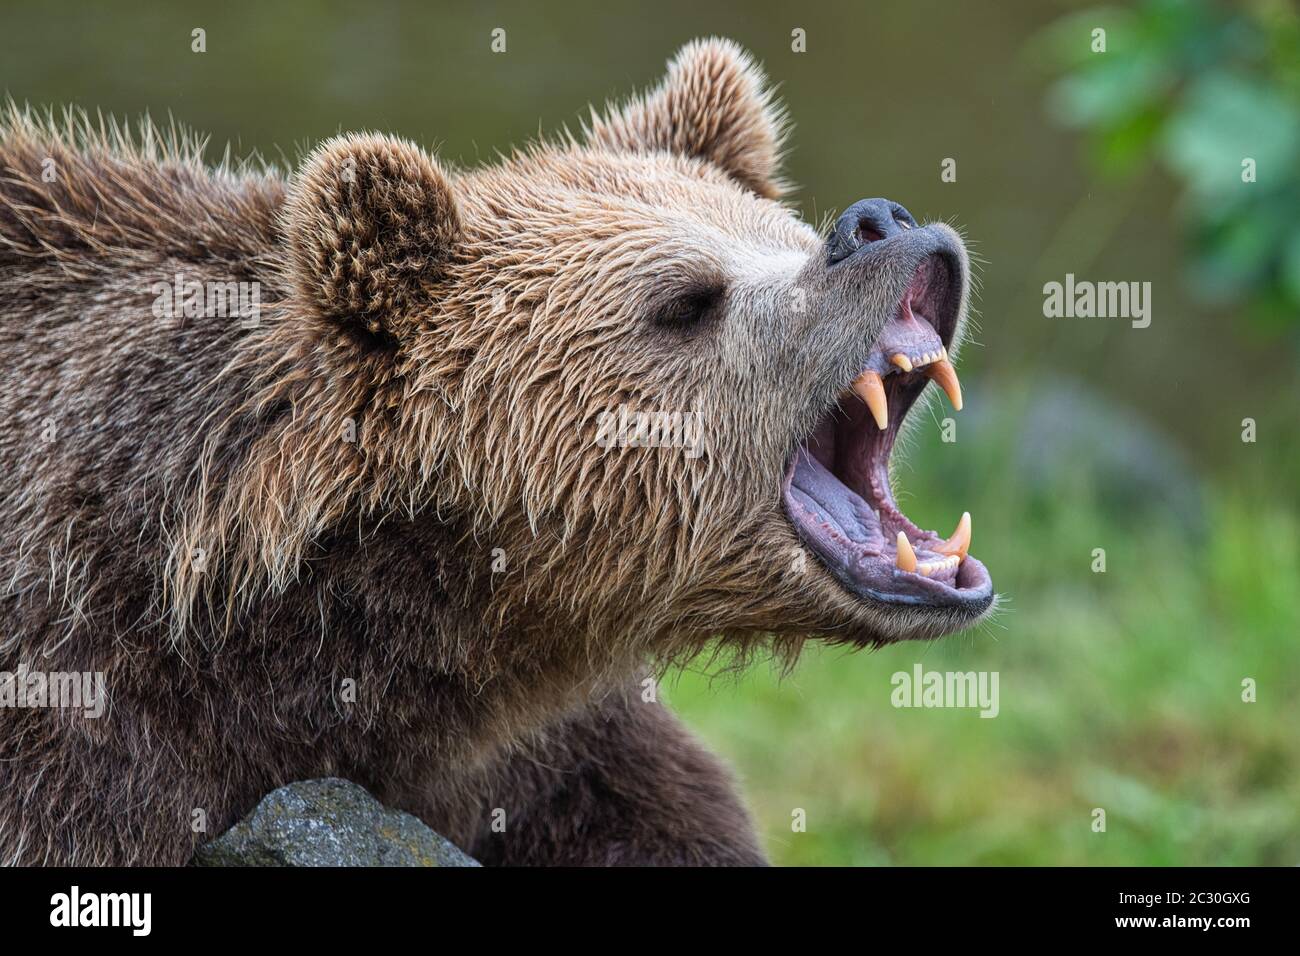 Braunbär, Braunbaer, Ursus arctos, Saeugetier, Brown bear, mammal, hunter, large, nature, european, yells, roars, Stock Photo